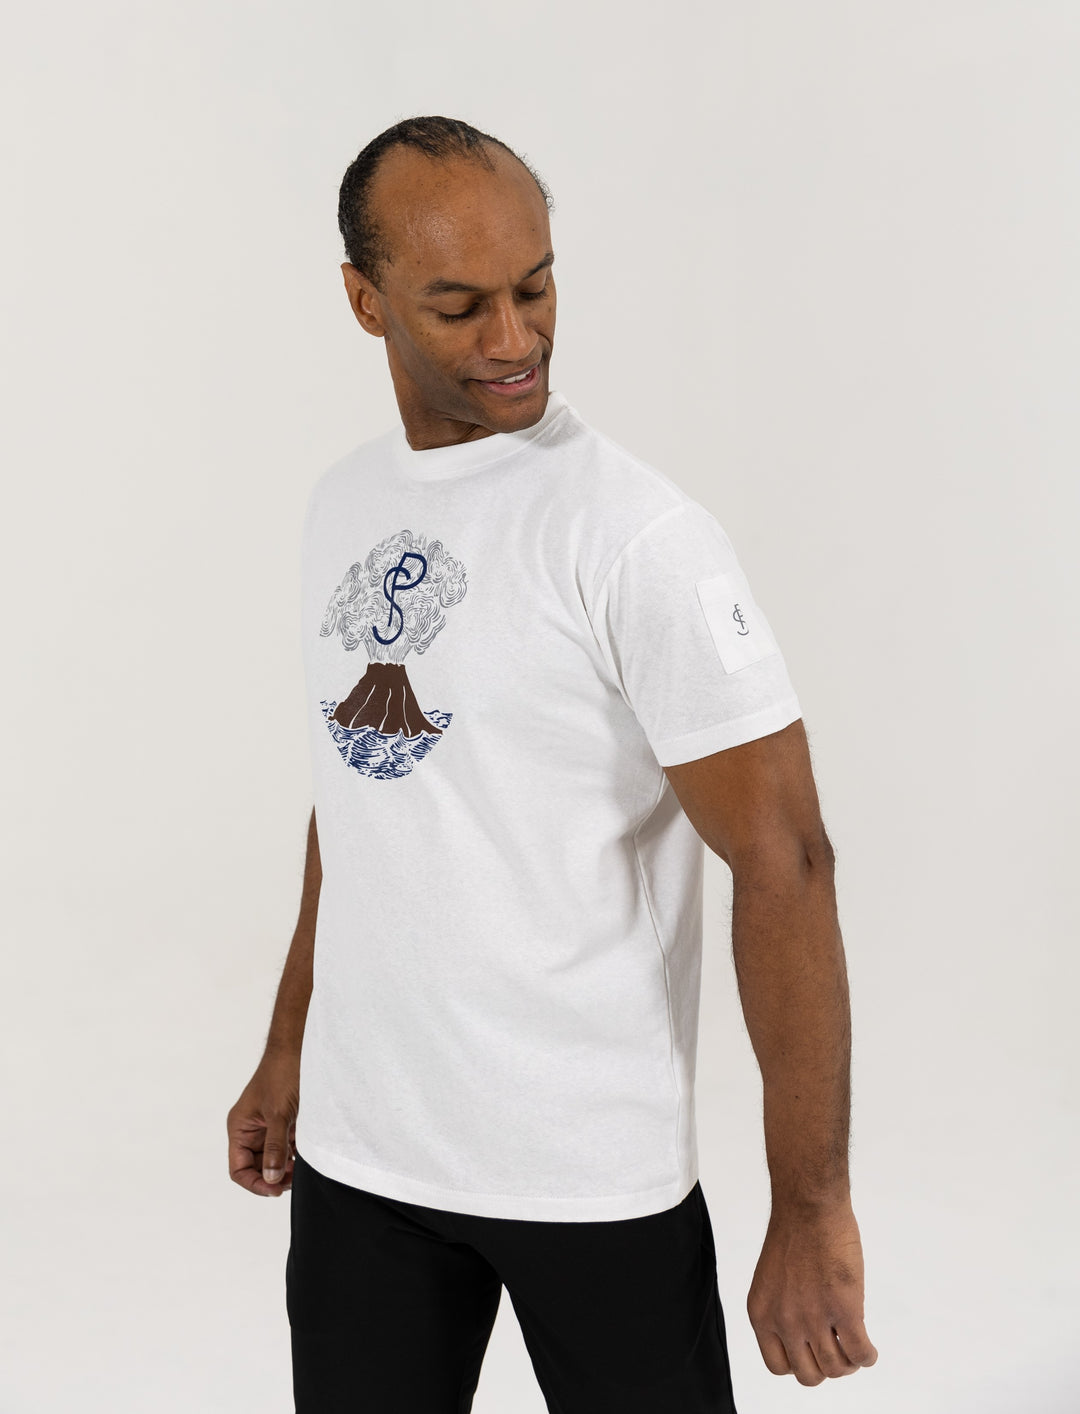 Elias Hemp T-Shirt - Limited Edition